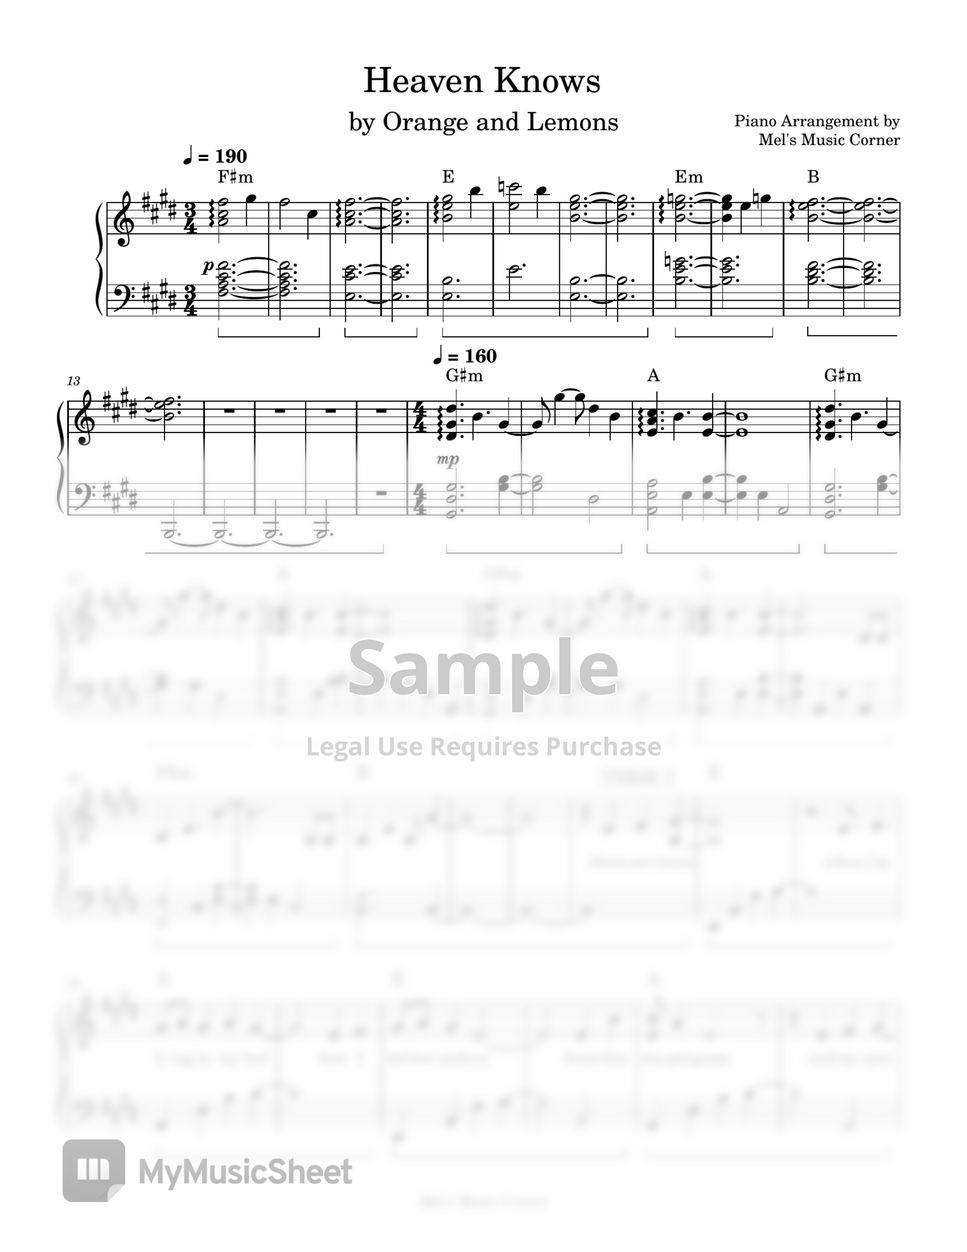 Orange and Lemons - Heaven Knows (piano sheet music) by Mel's Music Corner